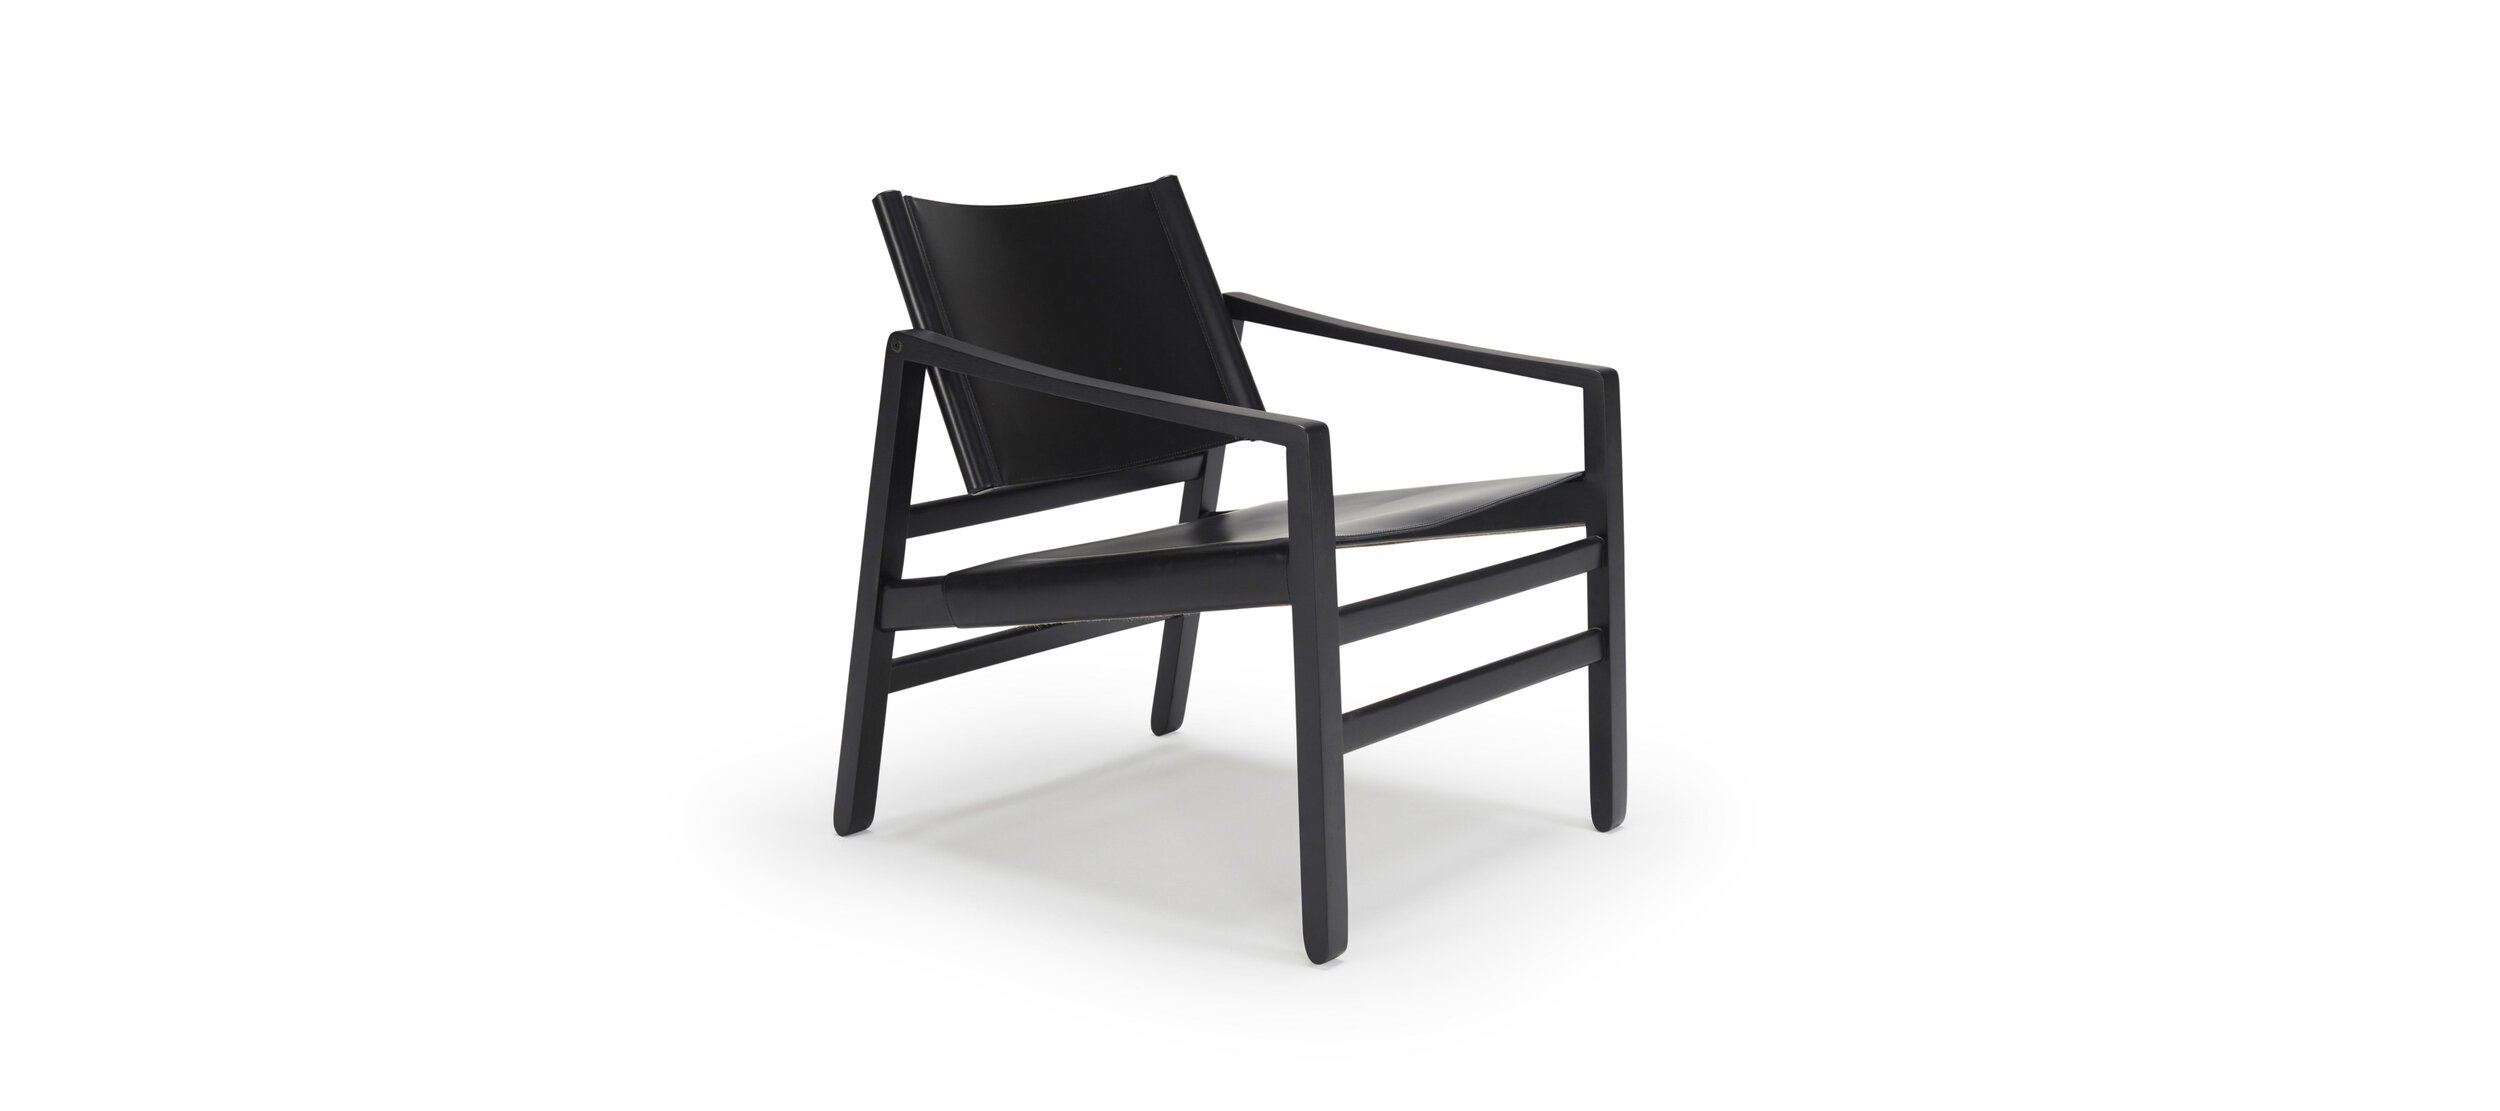 K410-chair-arms-800-black-p1.jpg